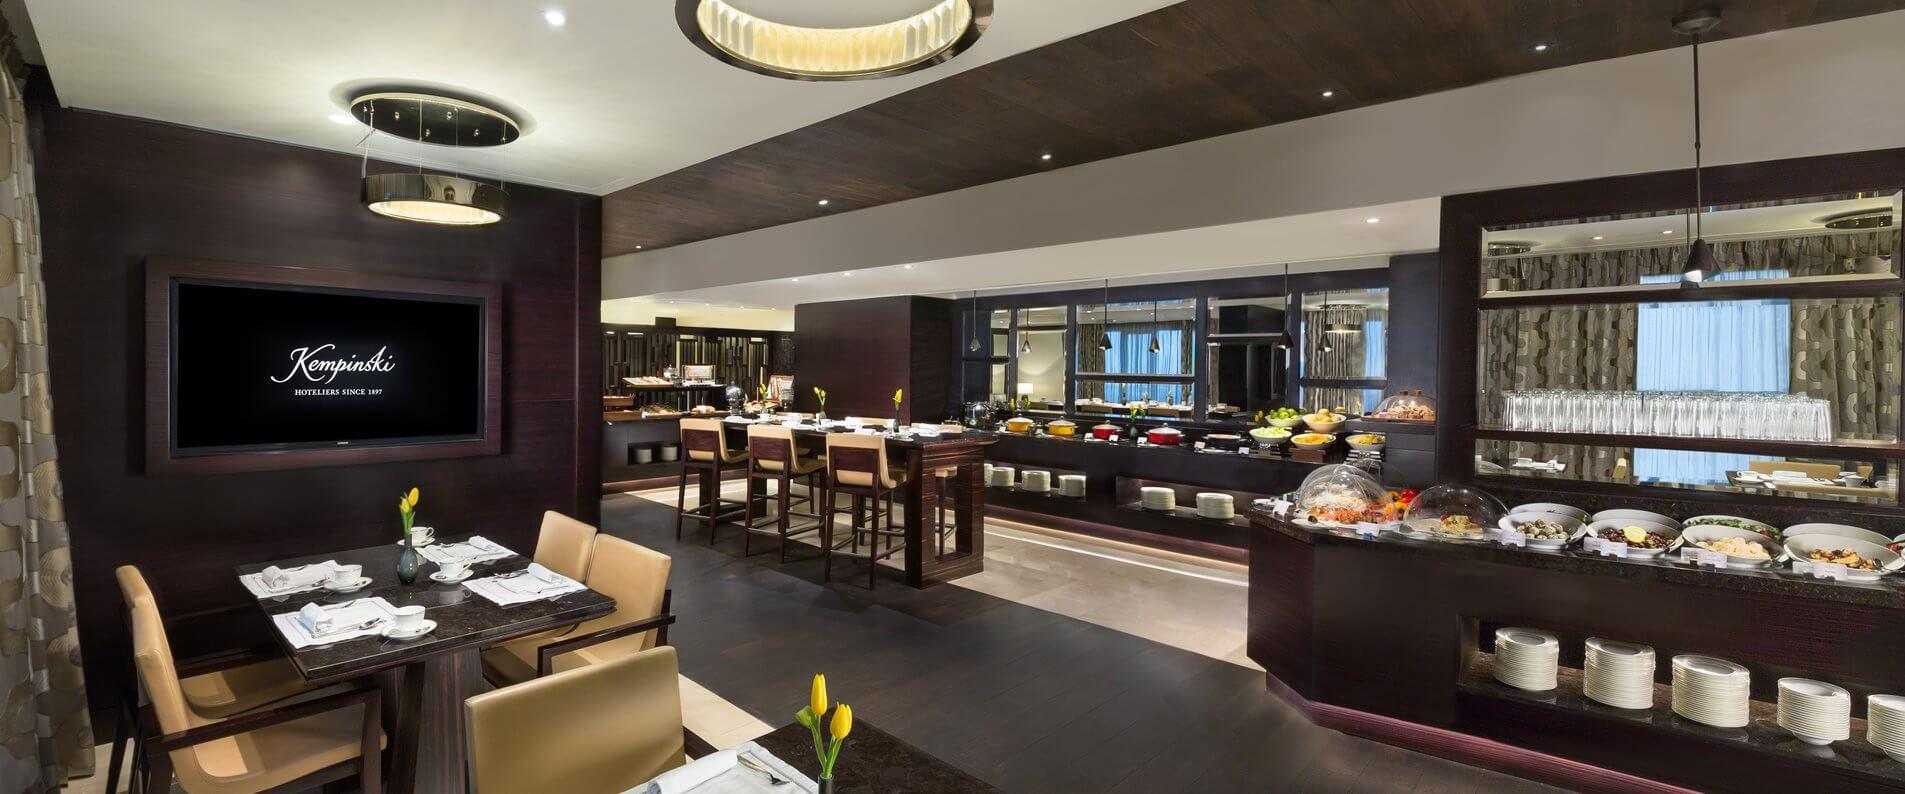 Kempinski Hotel Mall of the Emirates Club Lounge Dining Area